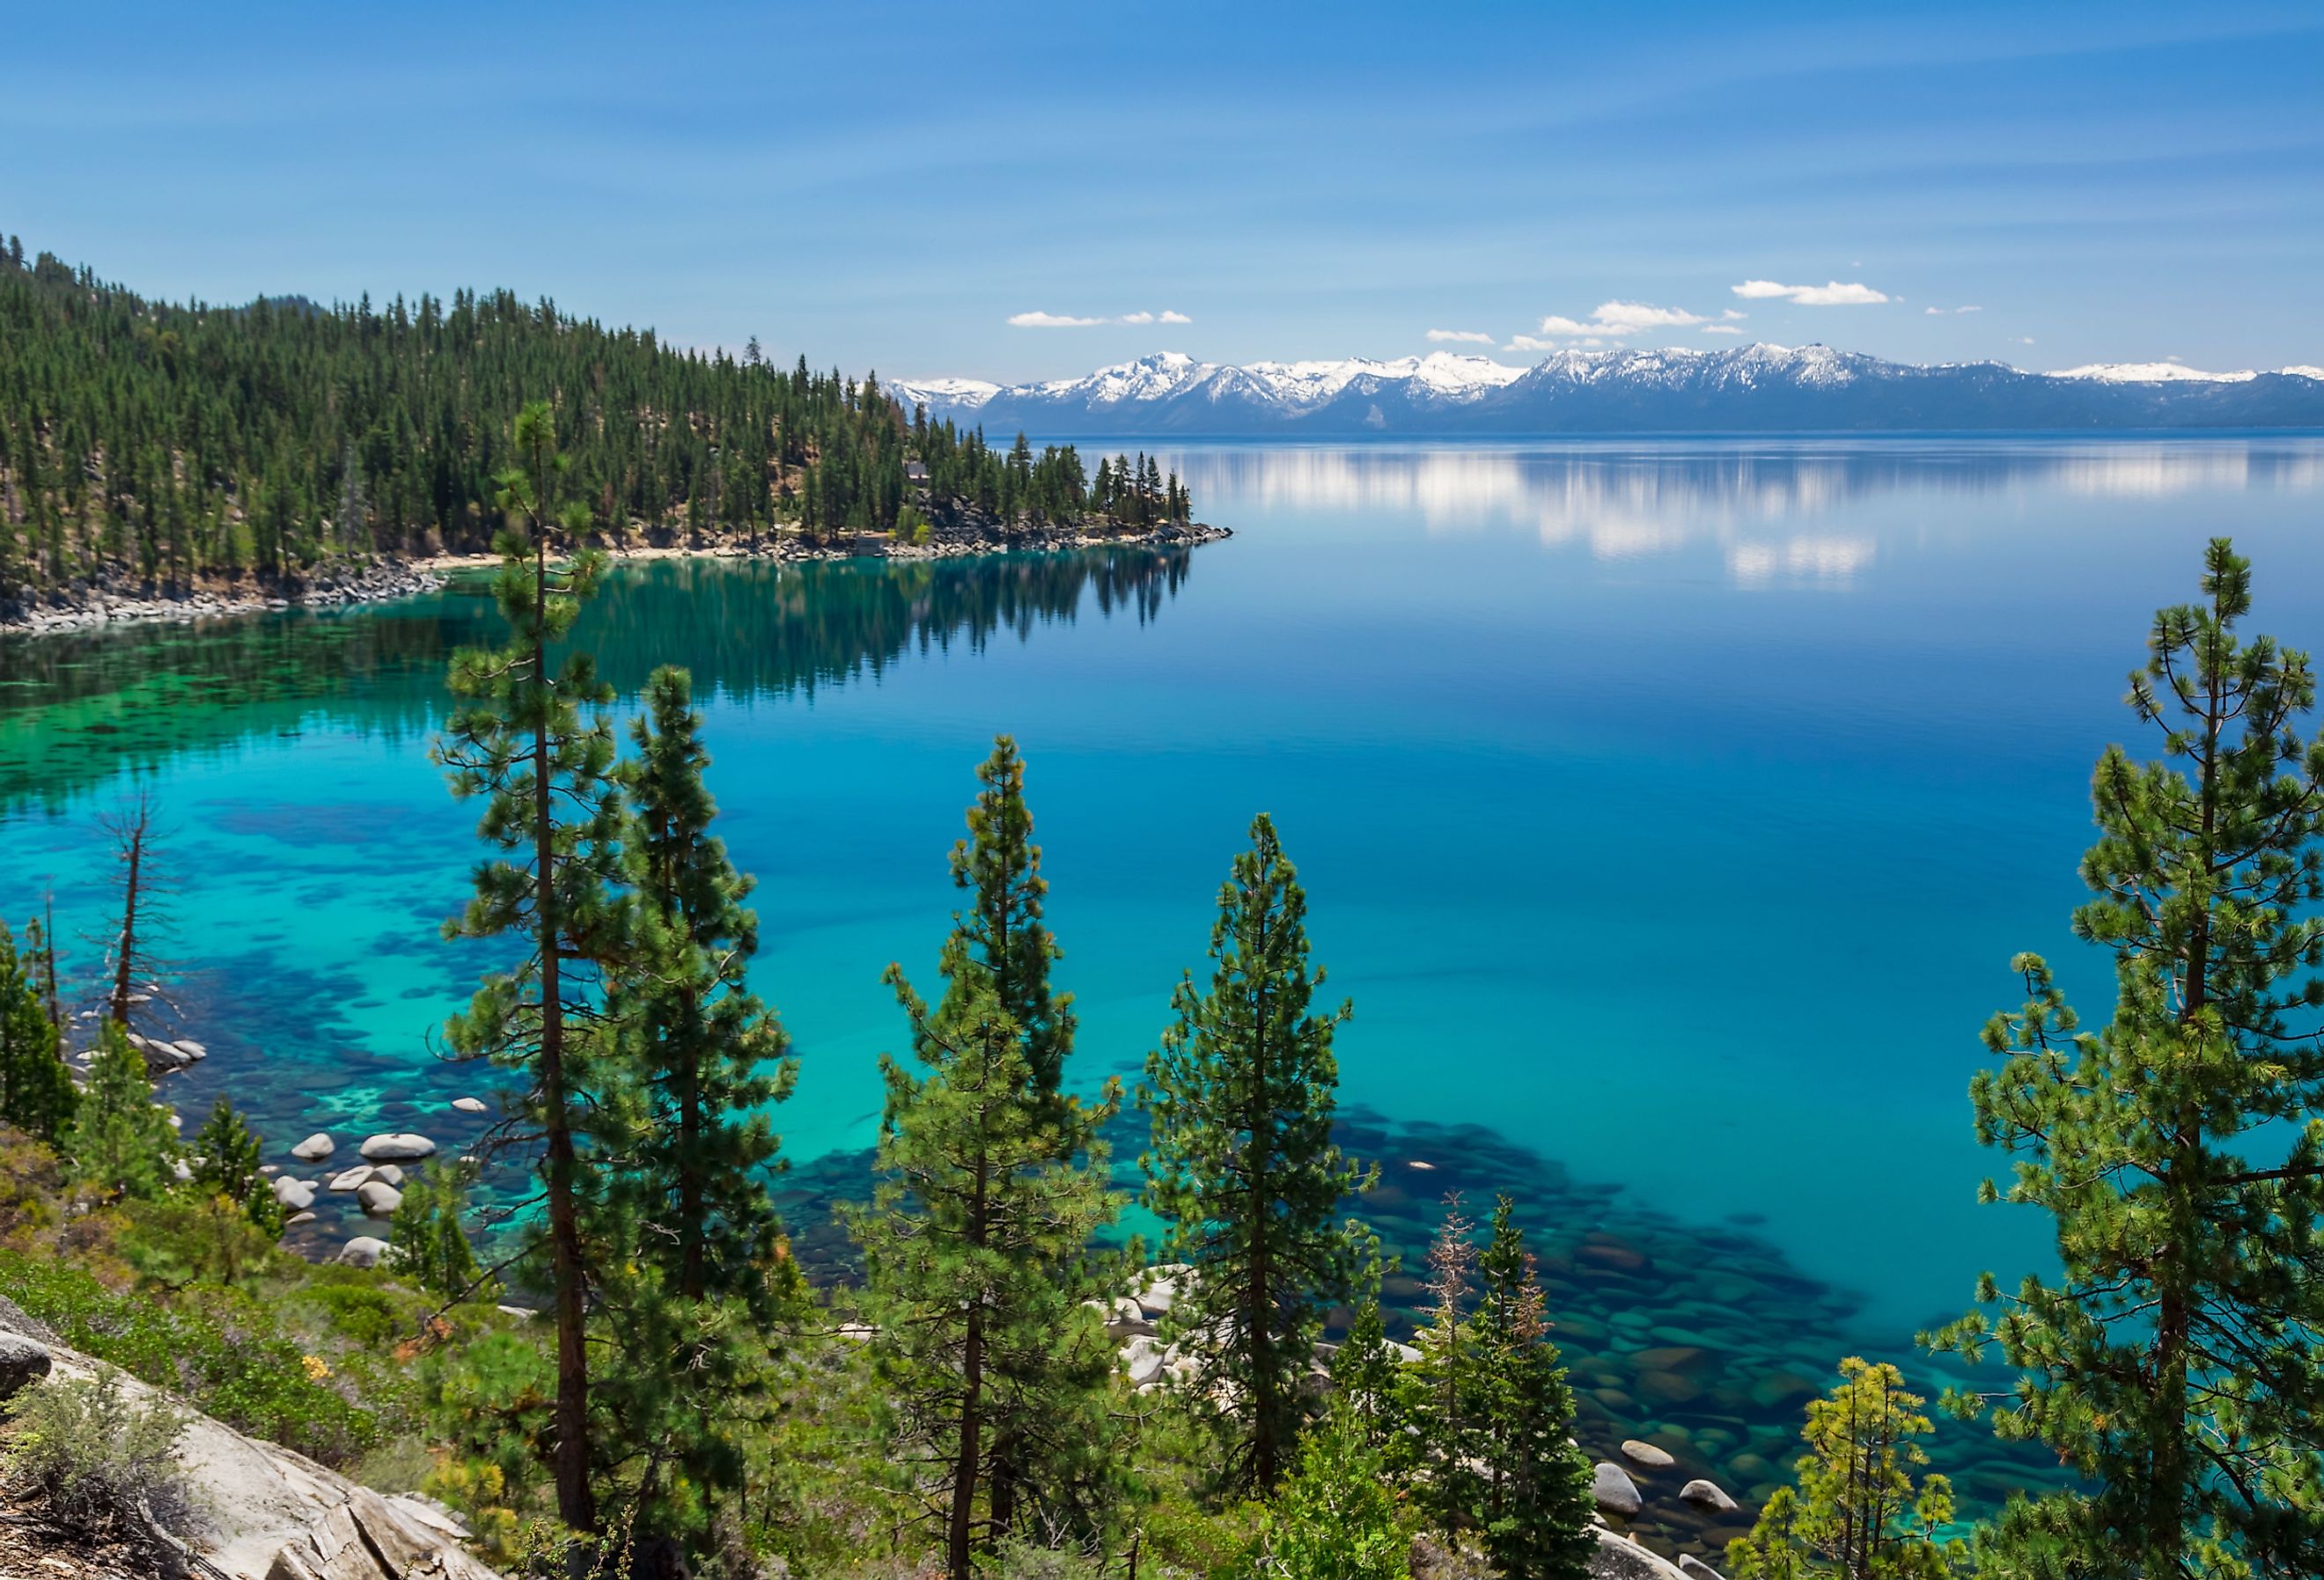 A breathtaking mountainside view of Lake Tahoe. Image credit topseller via Shutterstock